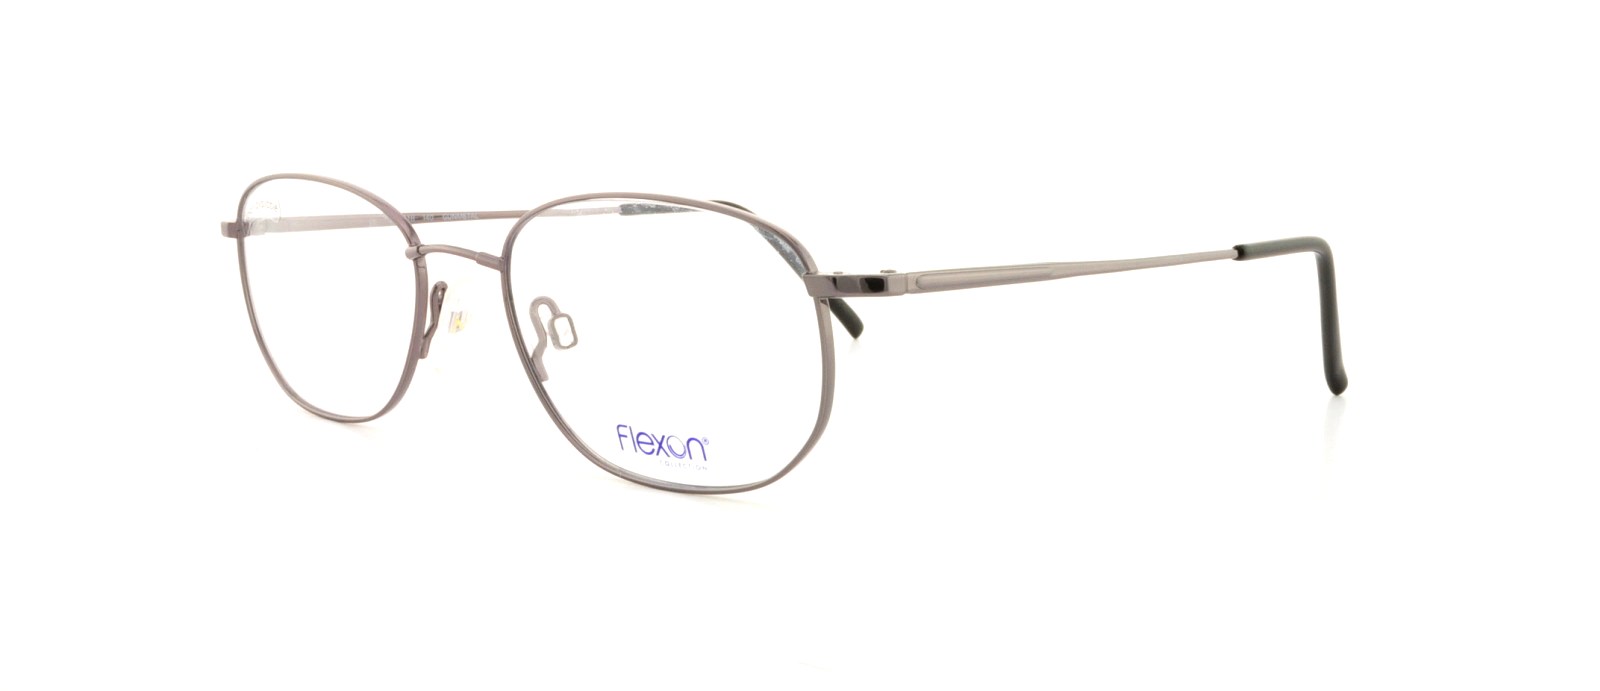 Picture of Flexon Eyeglasses 600